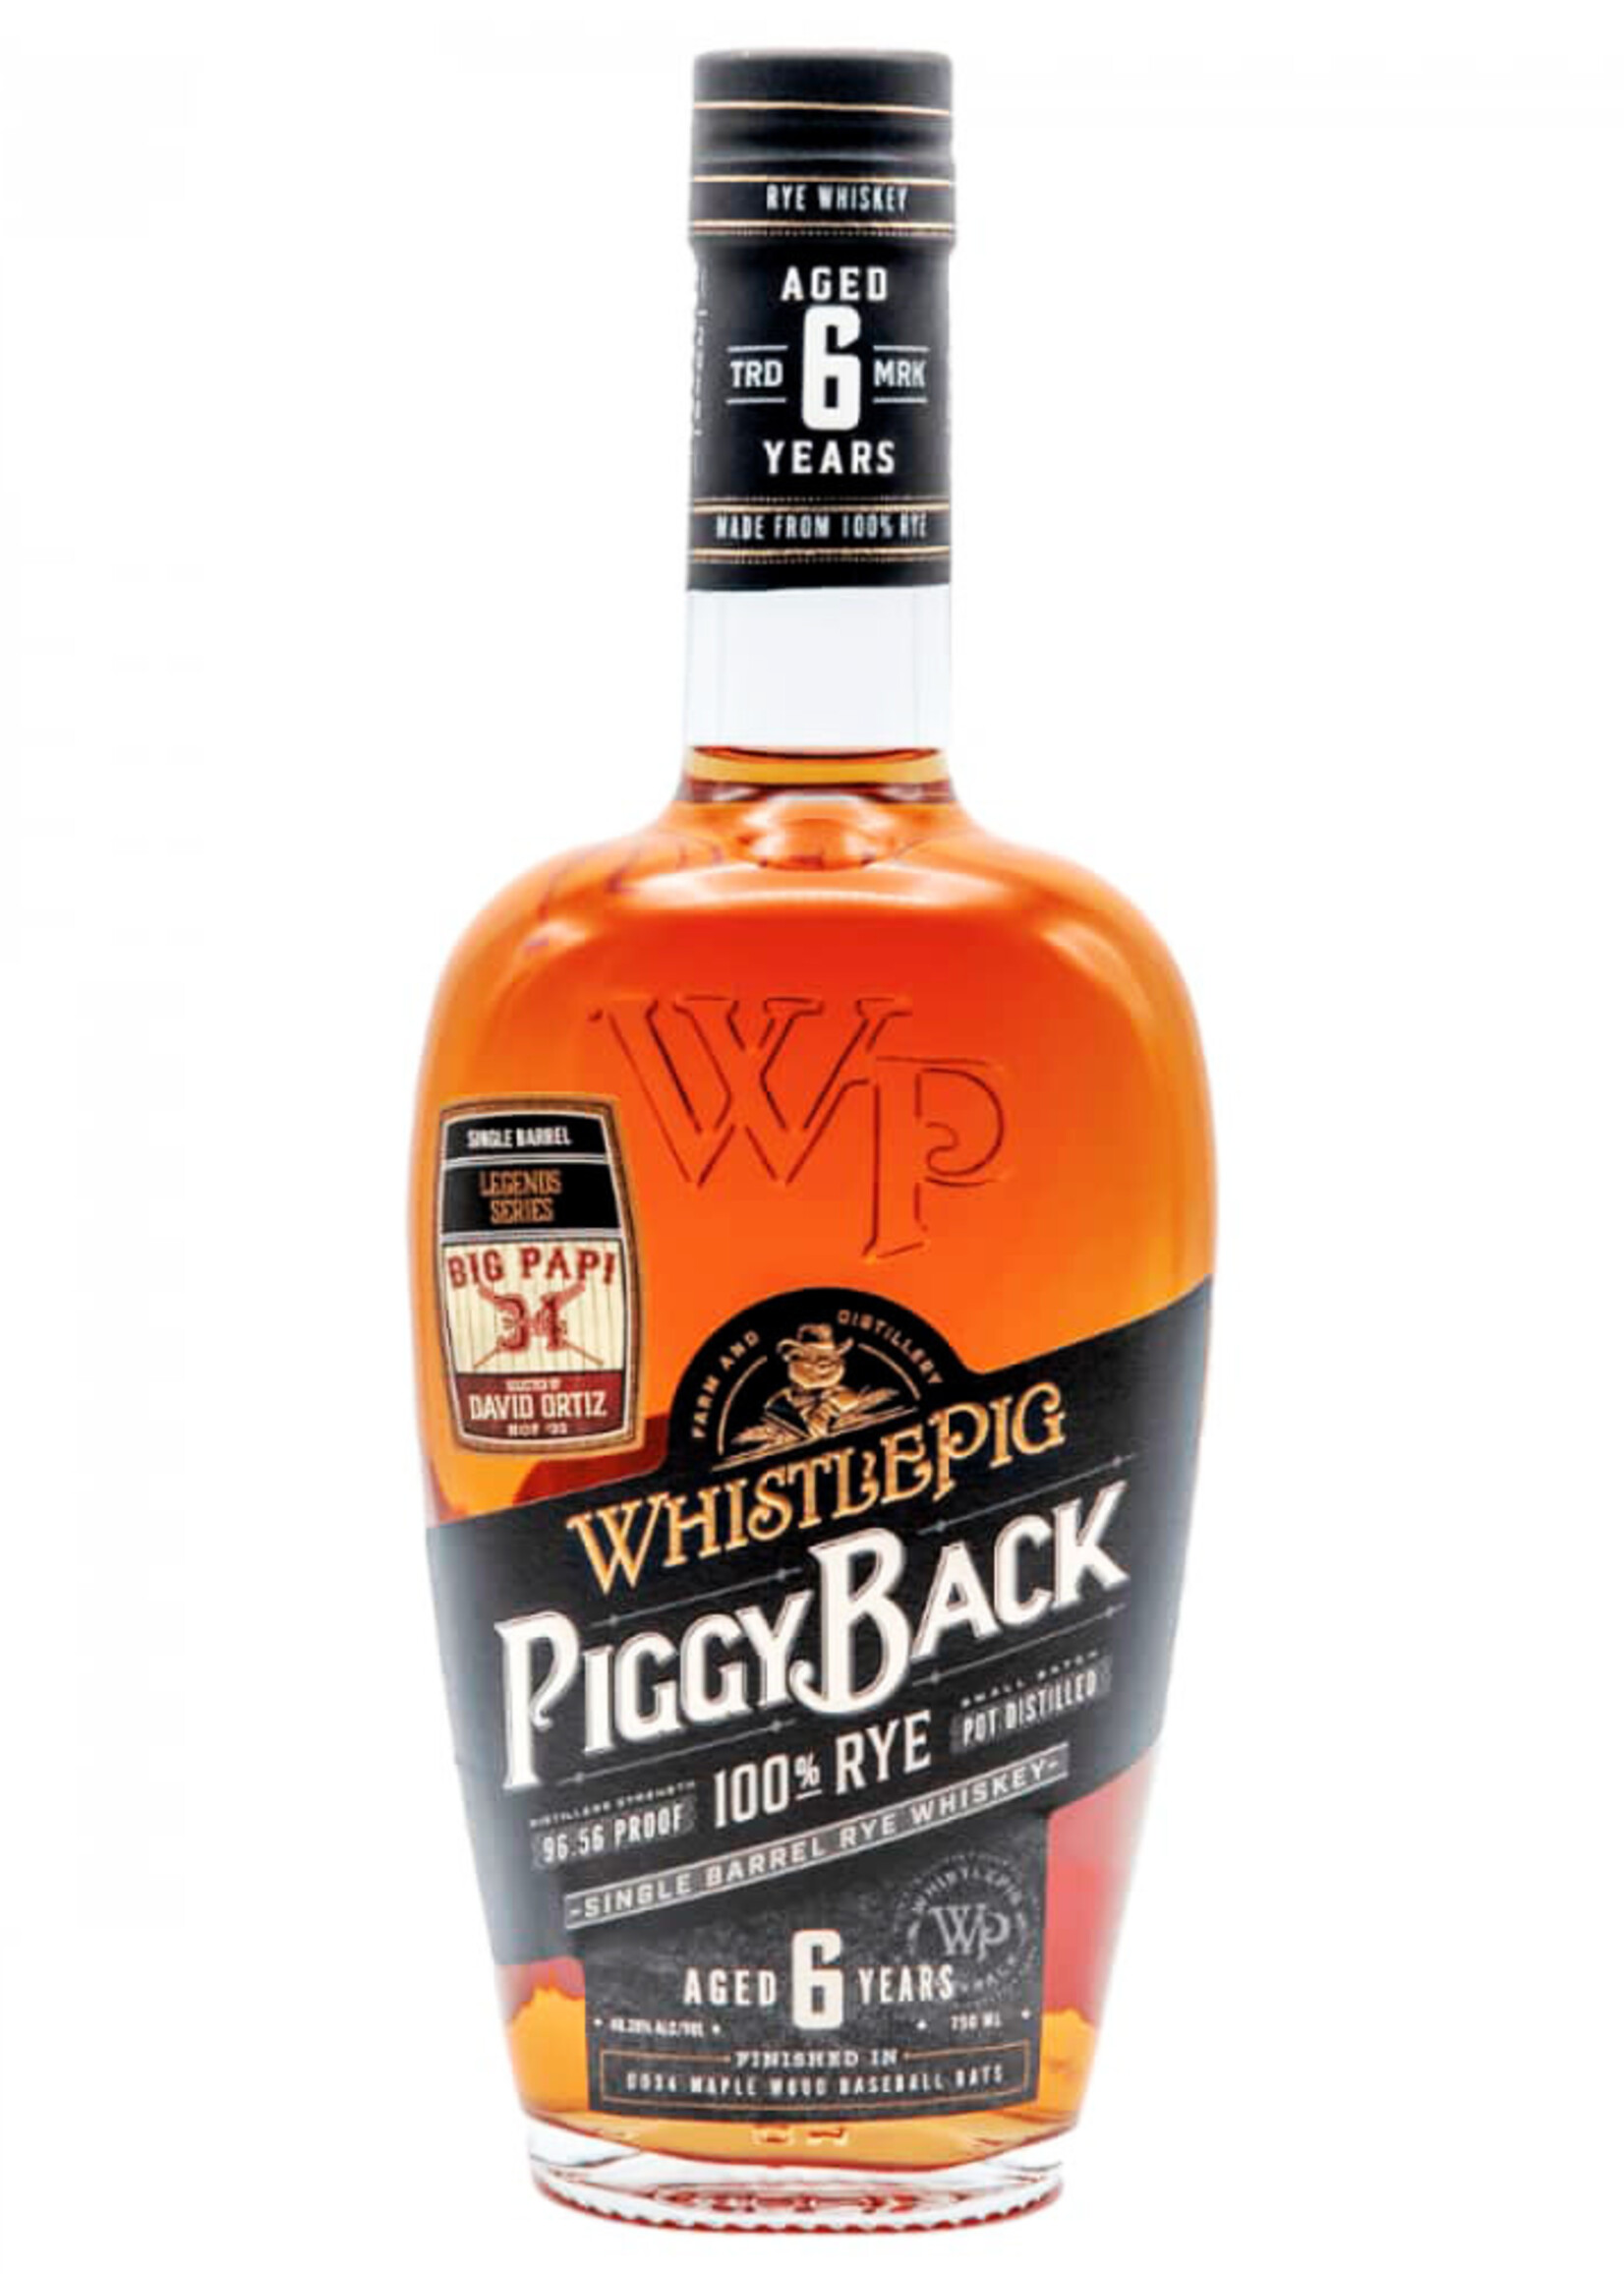 Whistlepig Whistlepig Rye Whiskey "Piggy Back" 6 Year Single Barrel Legends Series "Big Papi" edition 750ML